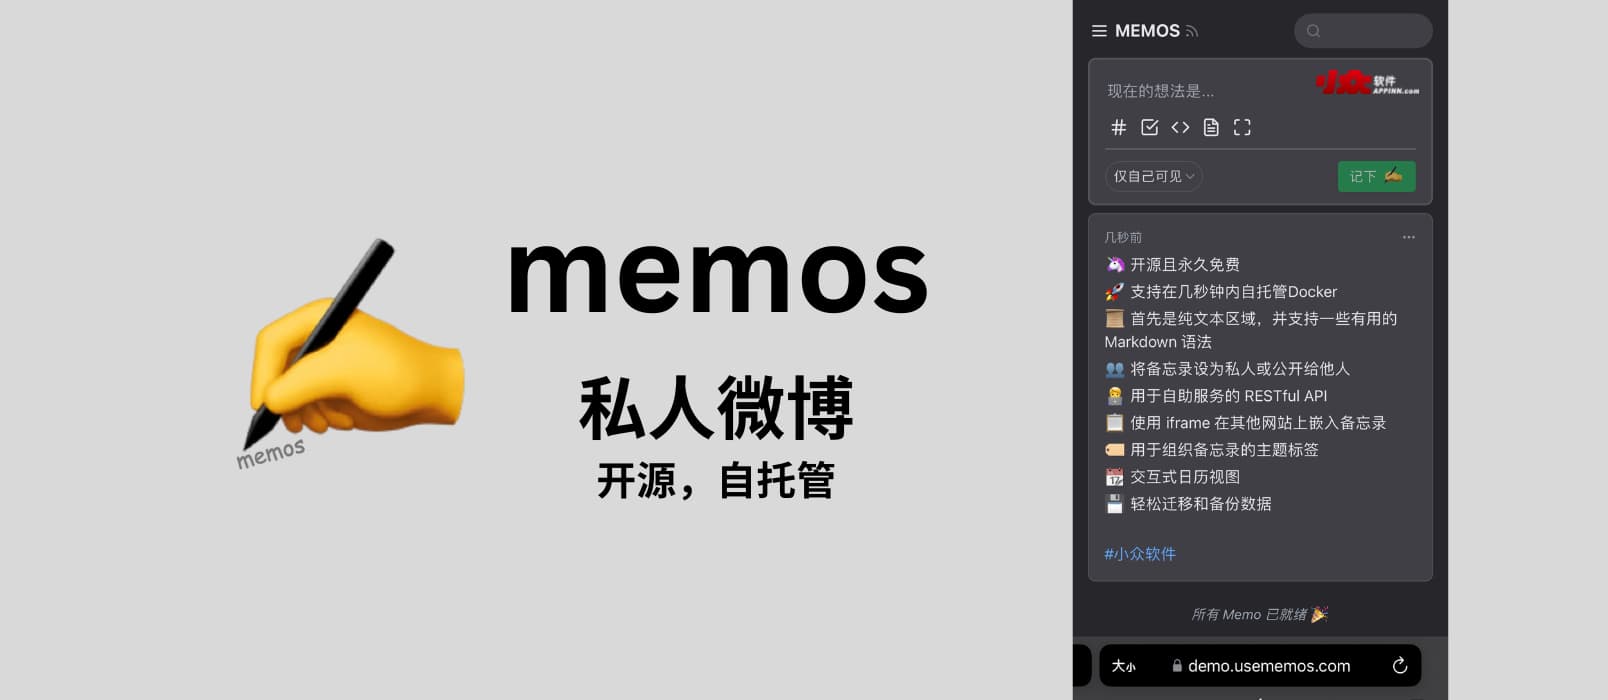 memos - 私人微博，开源可自托管的 flomo 替代